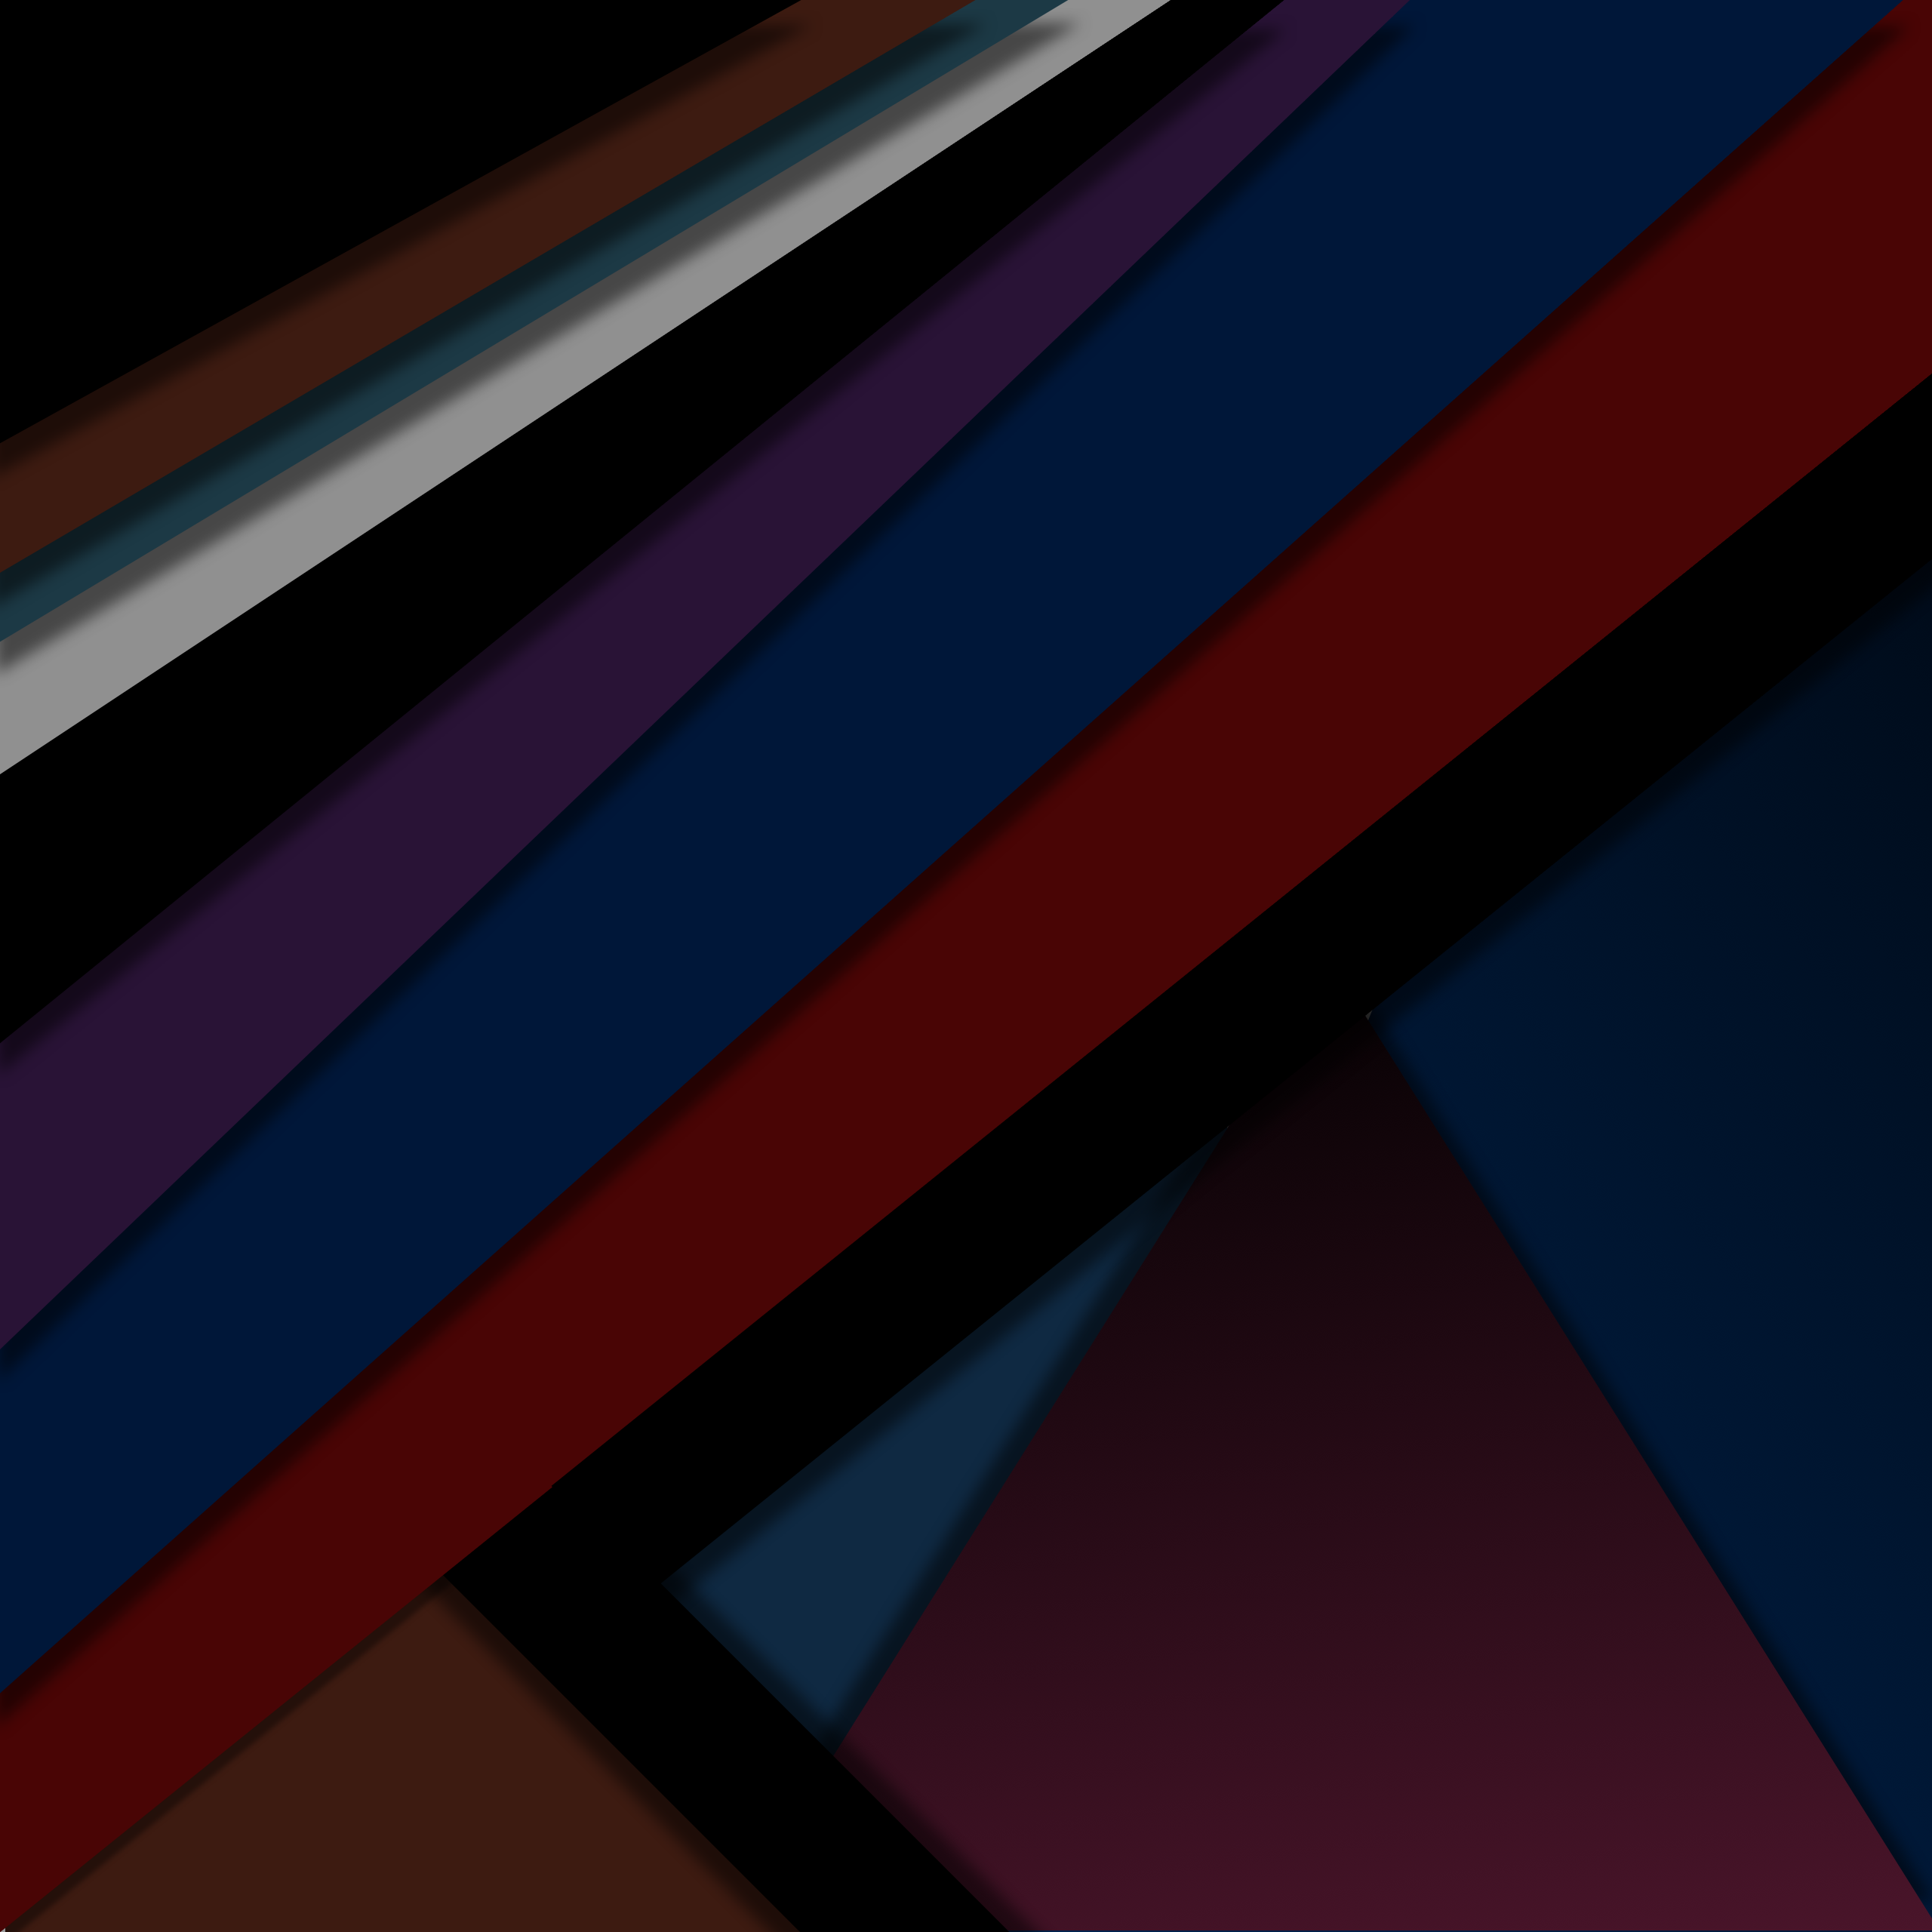 Wallpaper Minimalistic Dark Abstract Android Nexus6